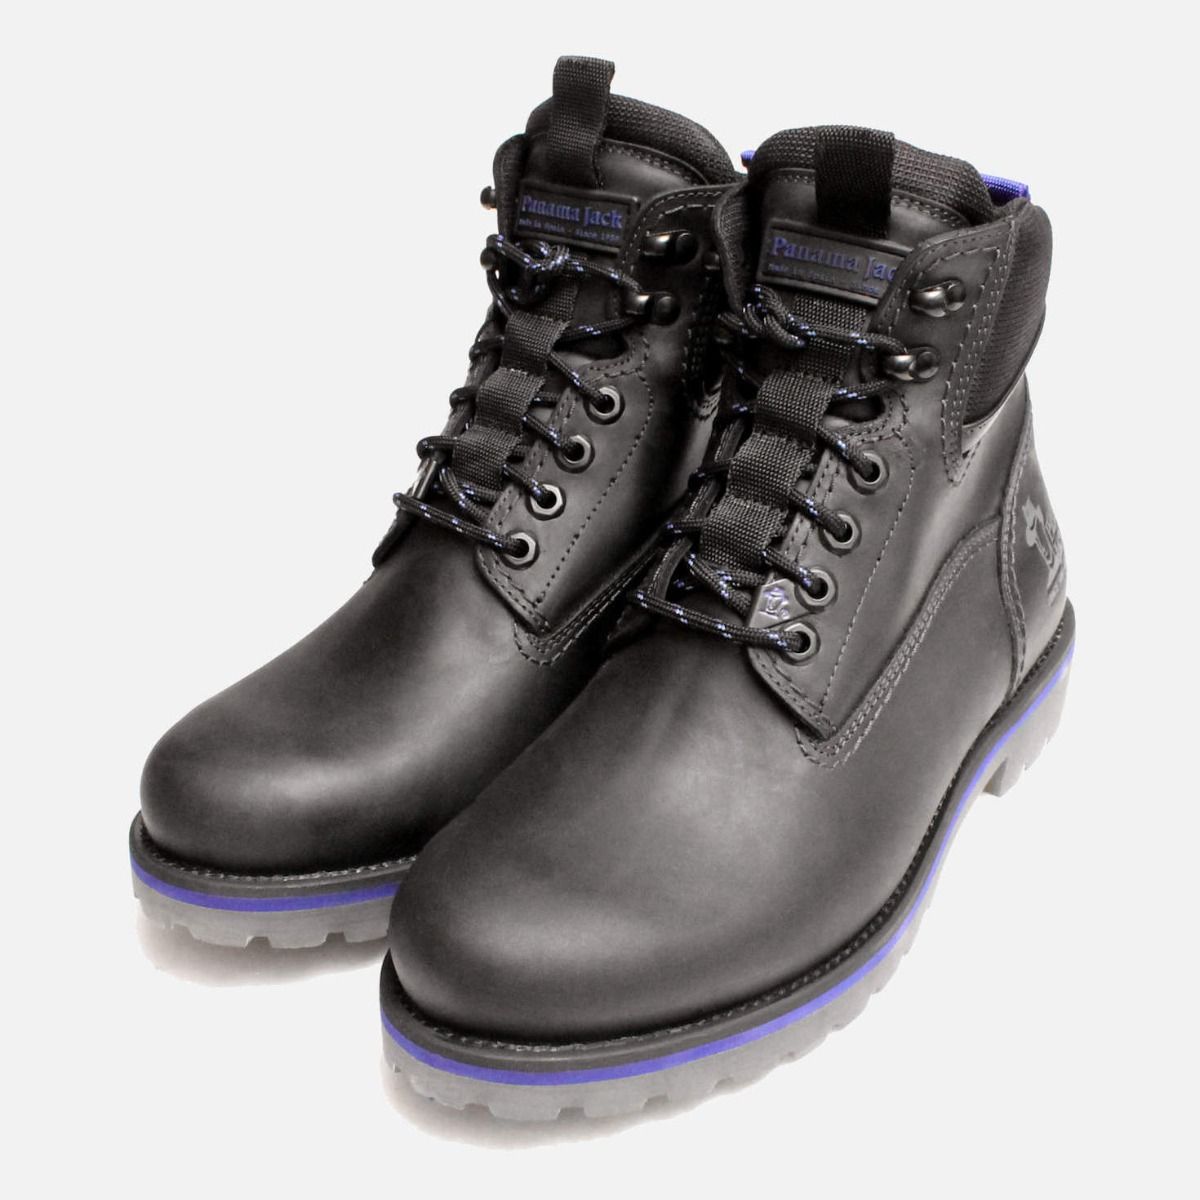 gore tex waterproof walking boots